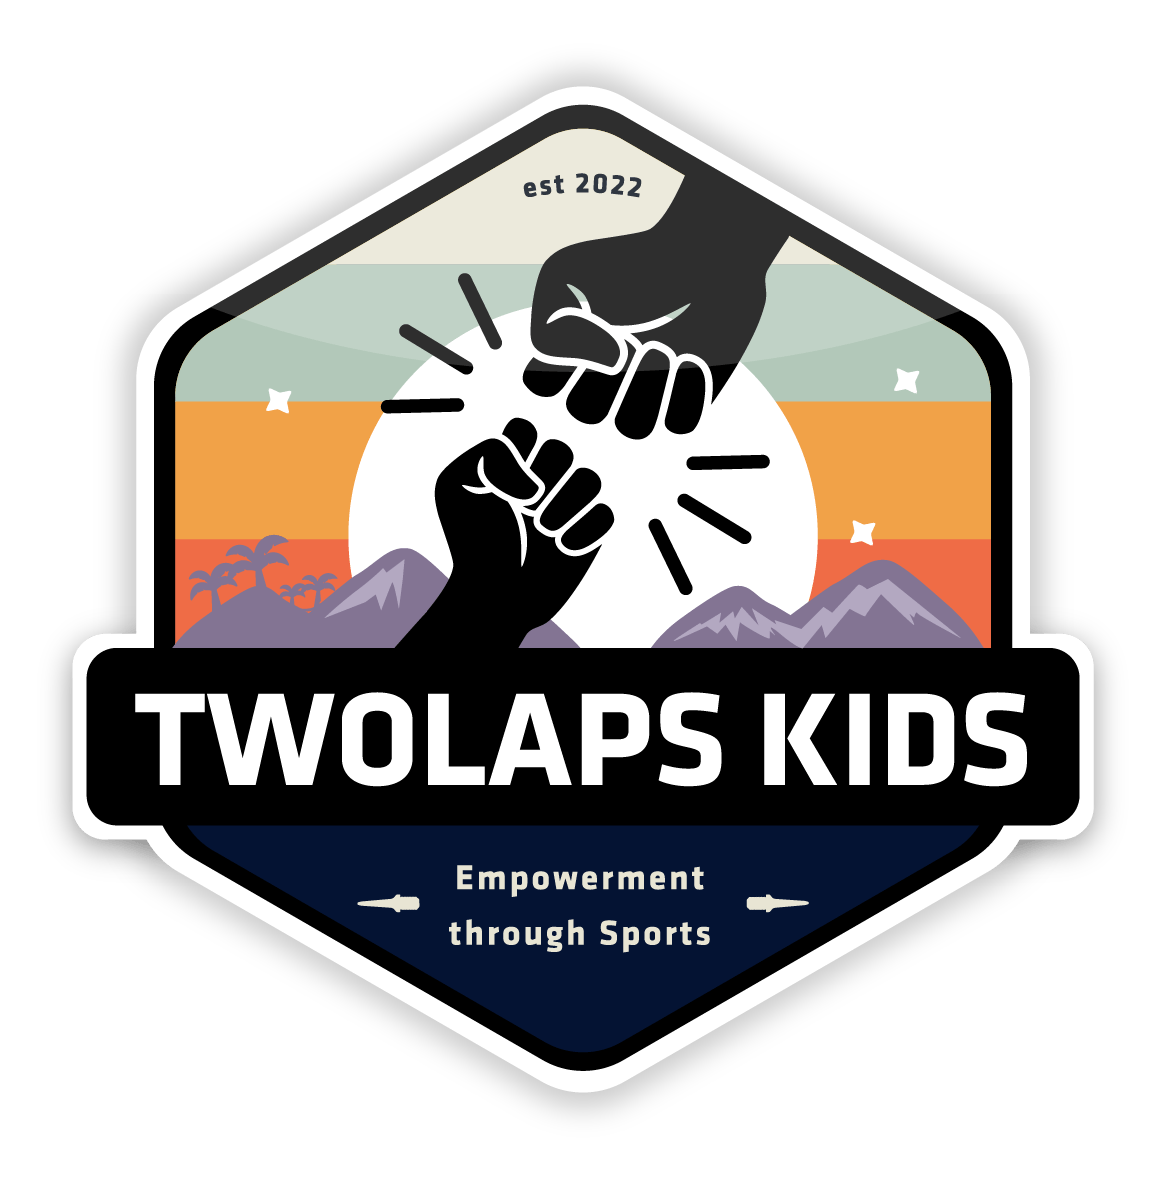 TWOLAPS KIDS